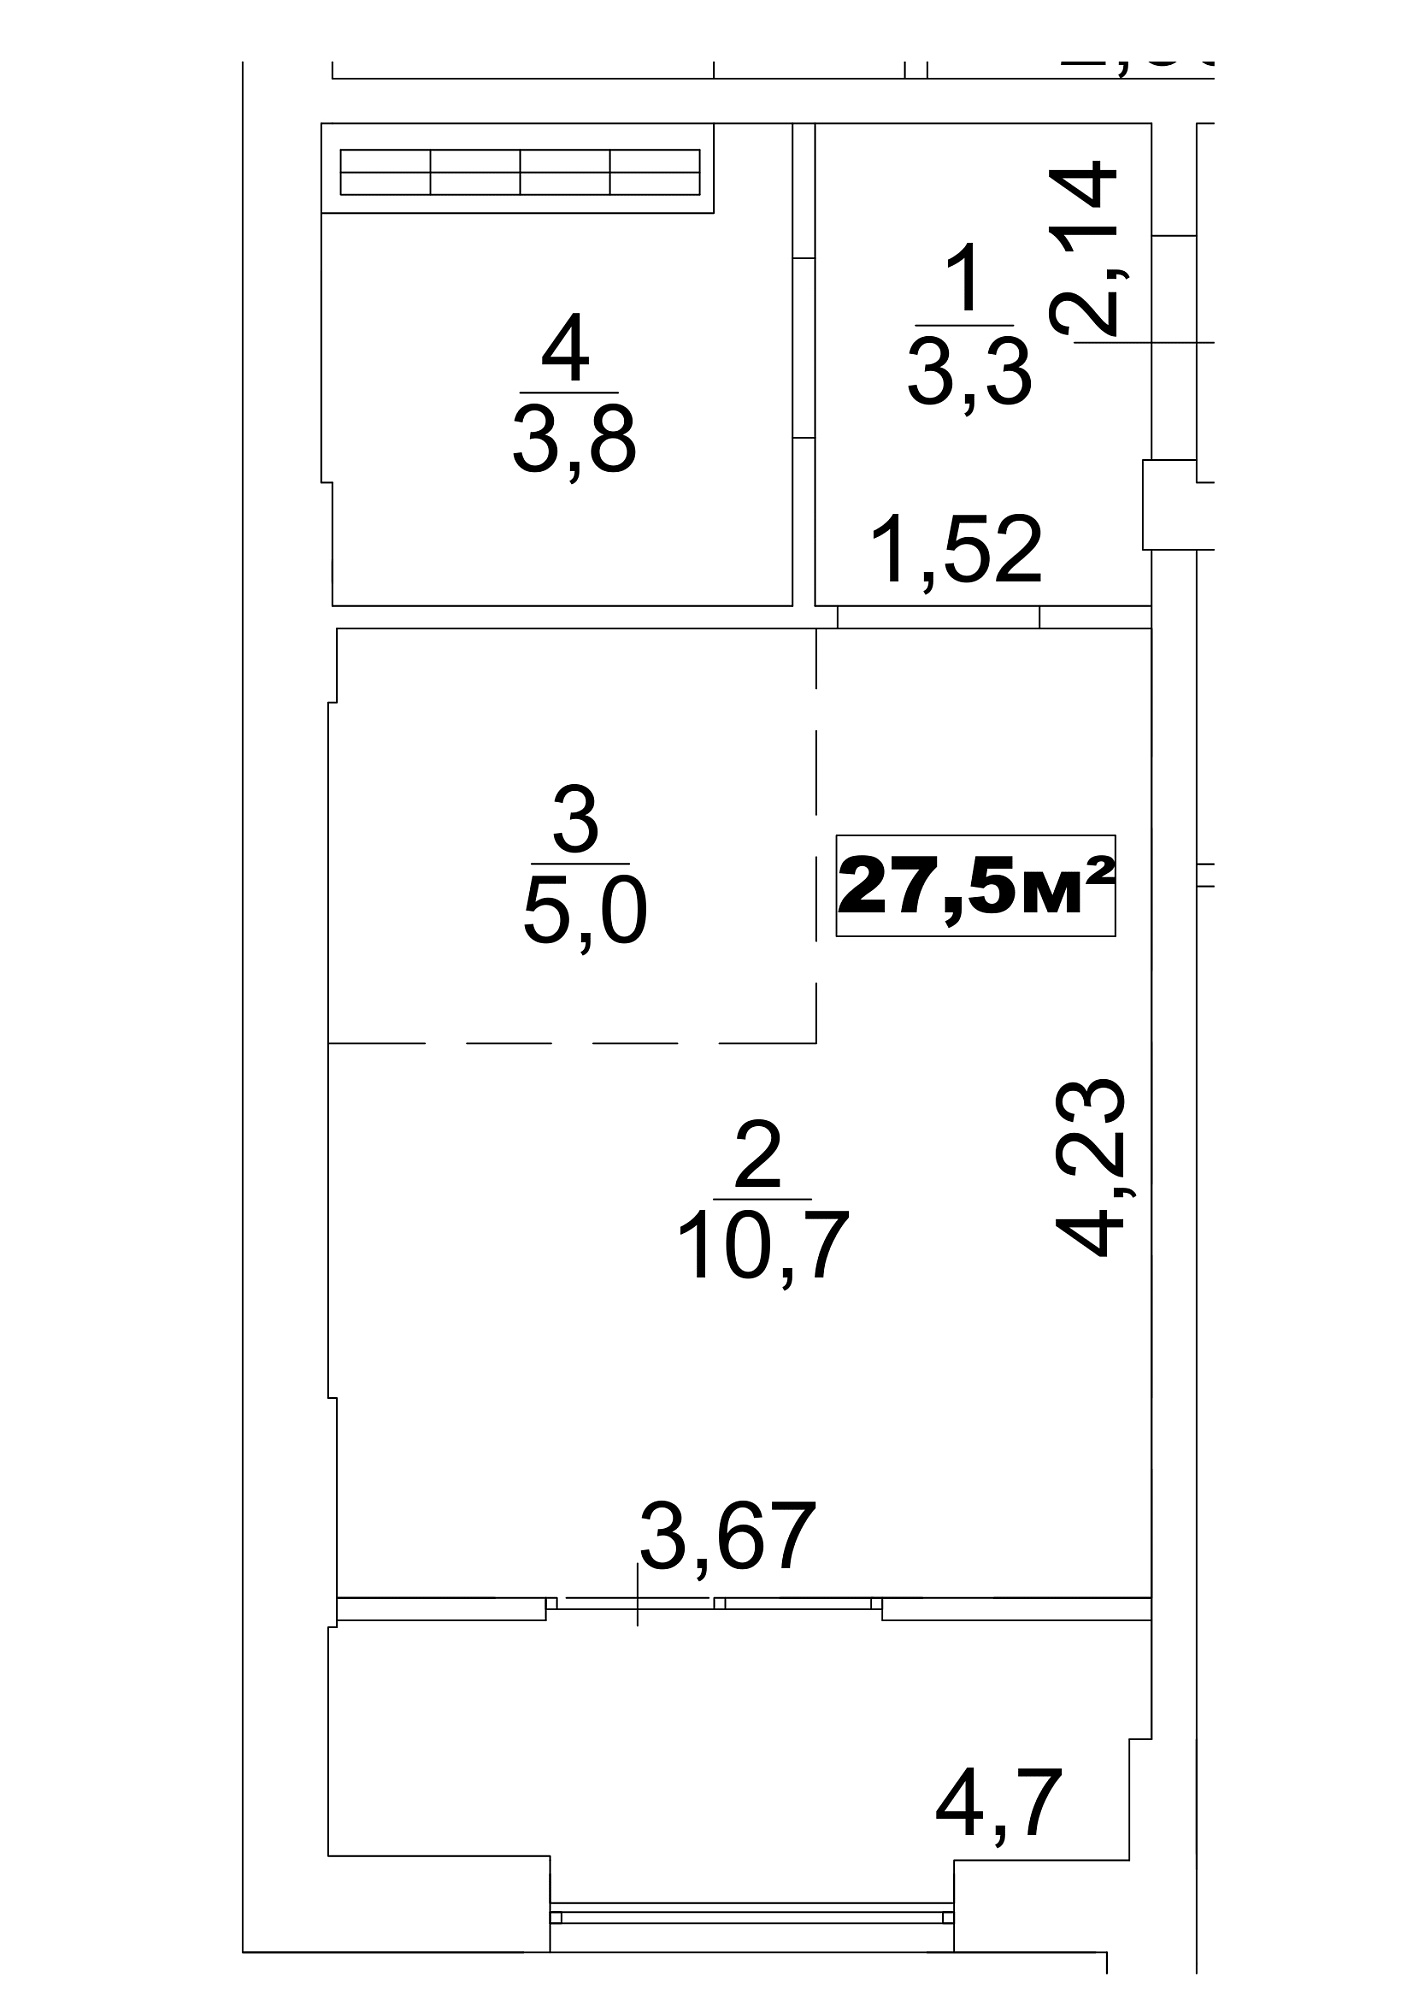 Planning Smart flats area 27.5m2, AB-13-06/0045а.